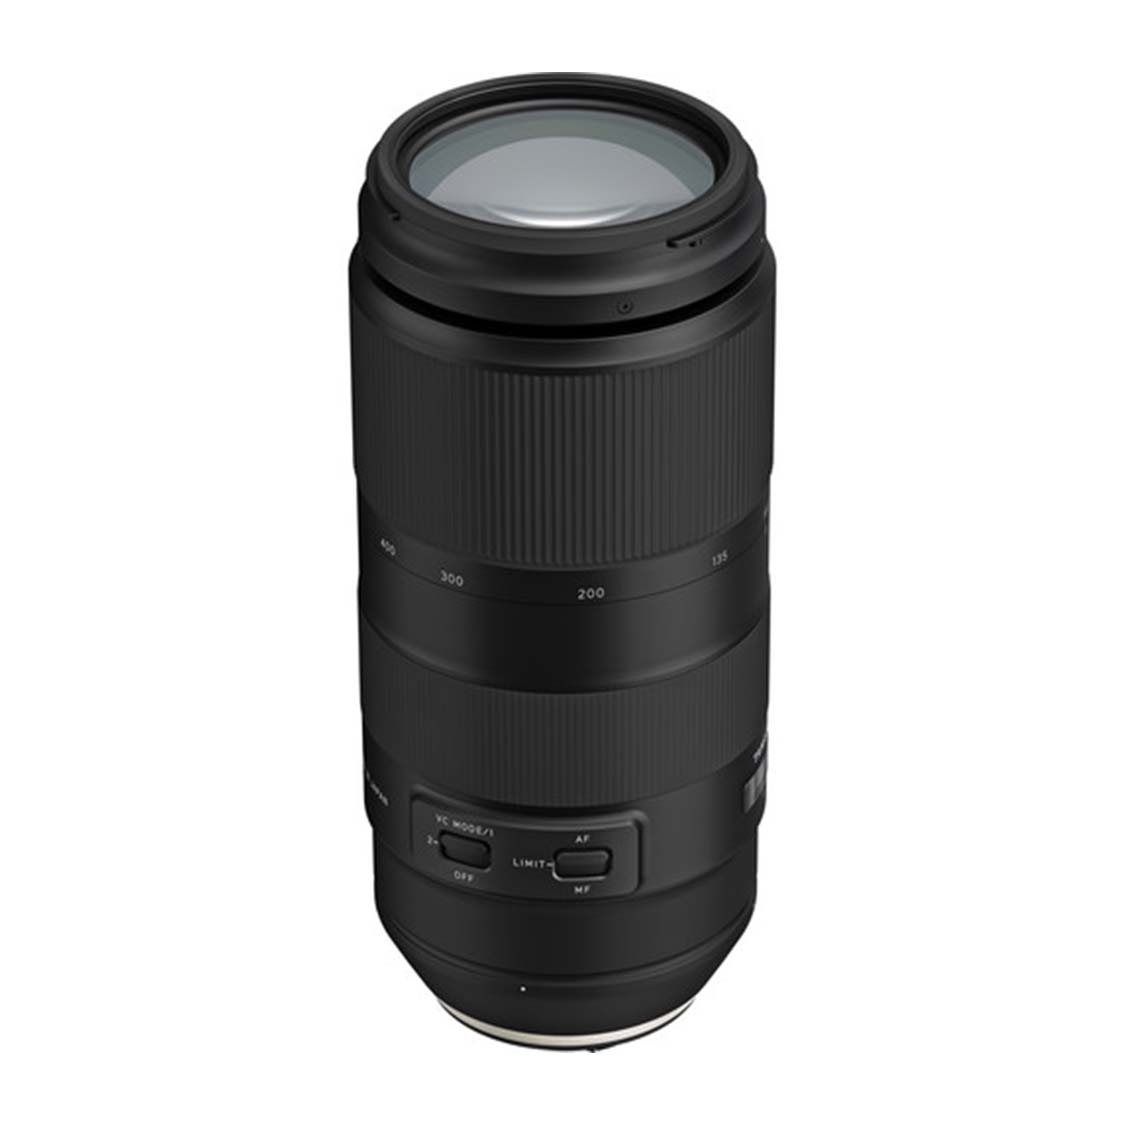 Tamron 100-400mm F4.5-6.3 DI VC USD Lens for Nikon F Mount